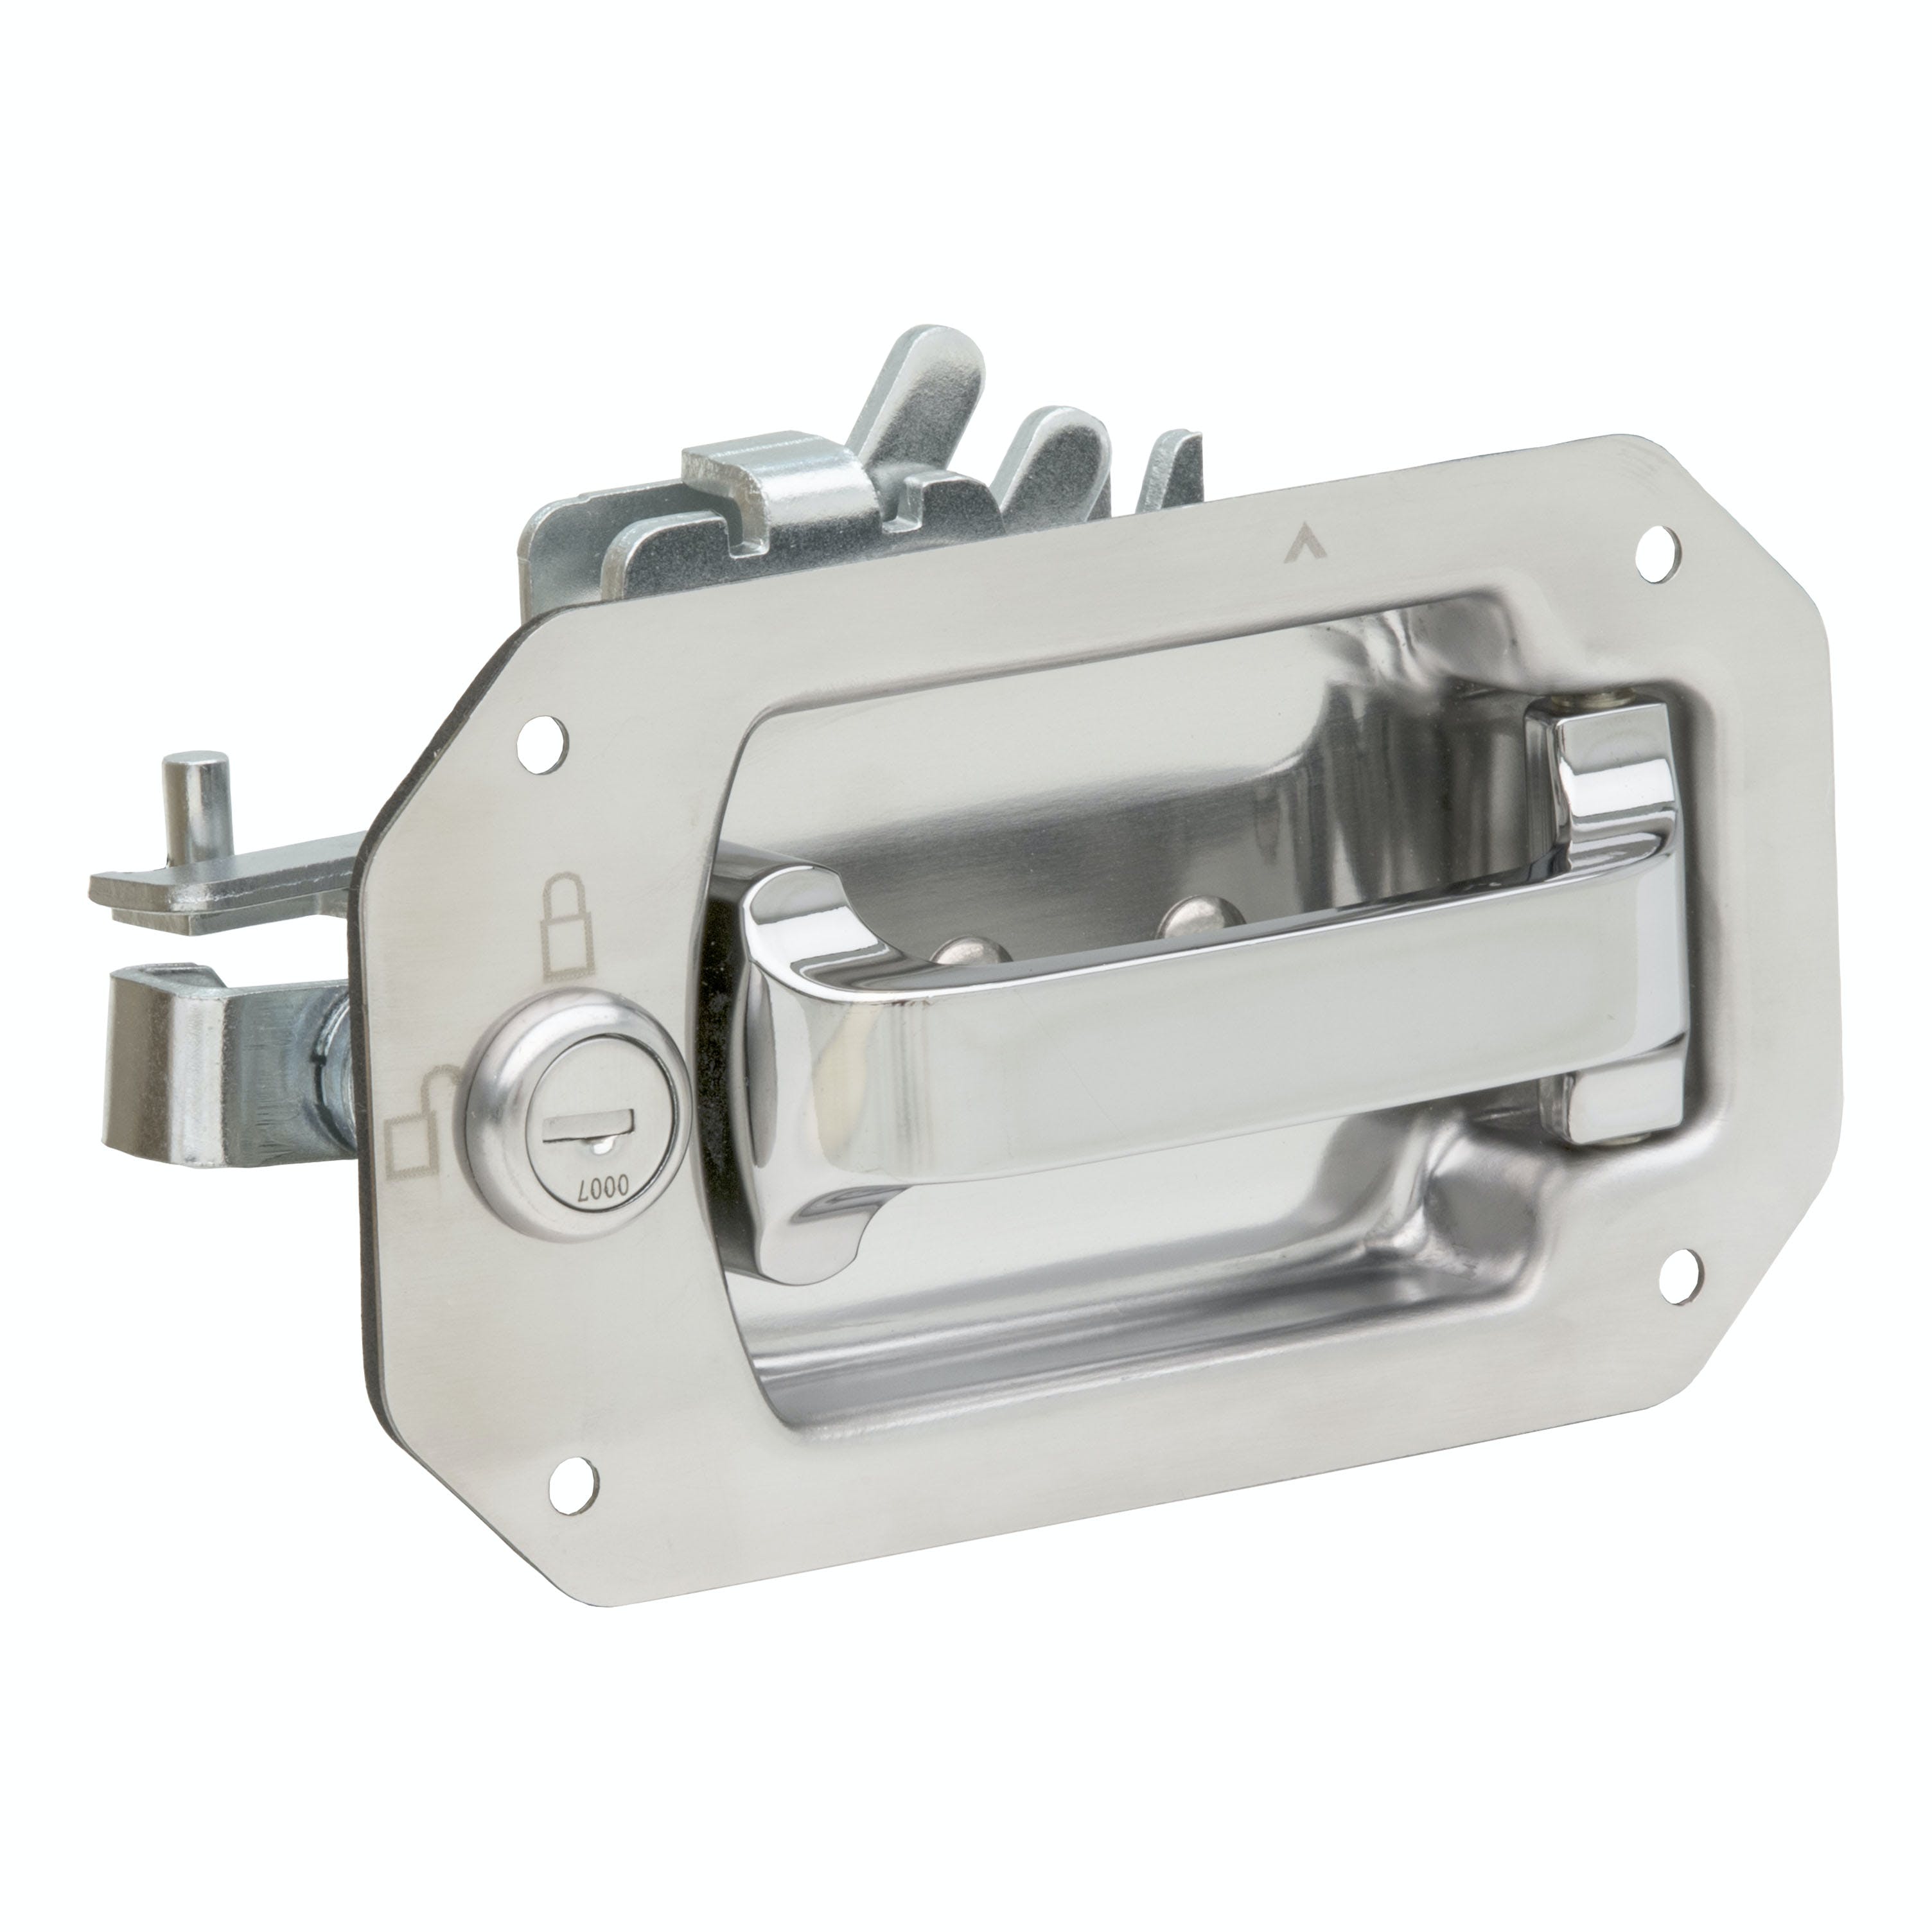 UWS 003-HDL Locking Pull Handle